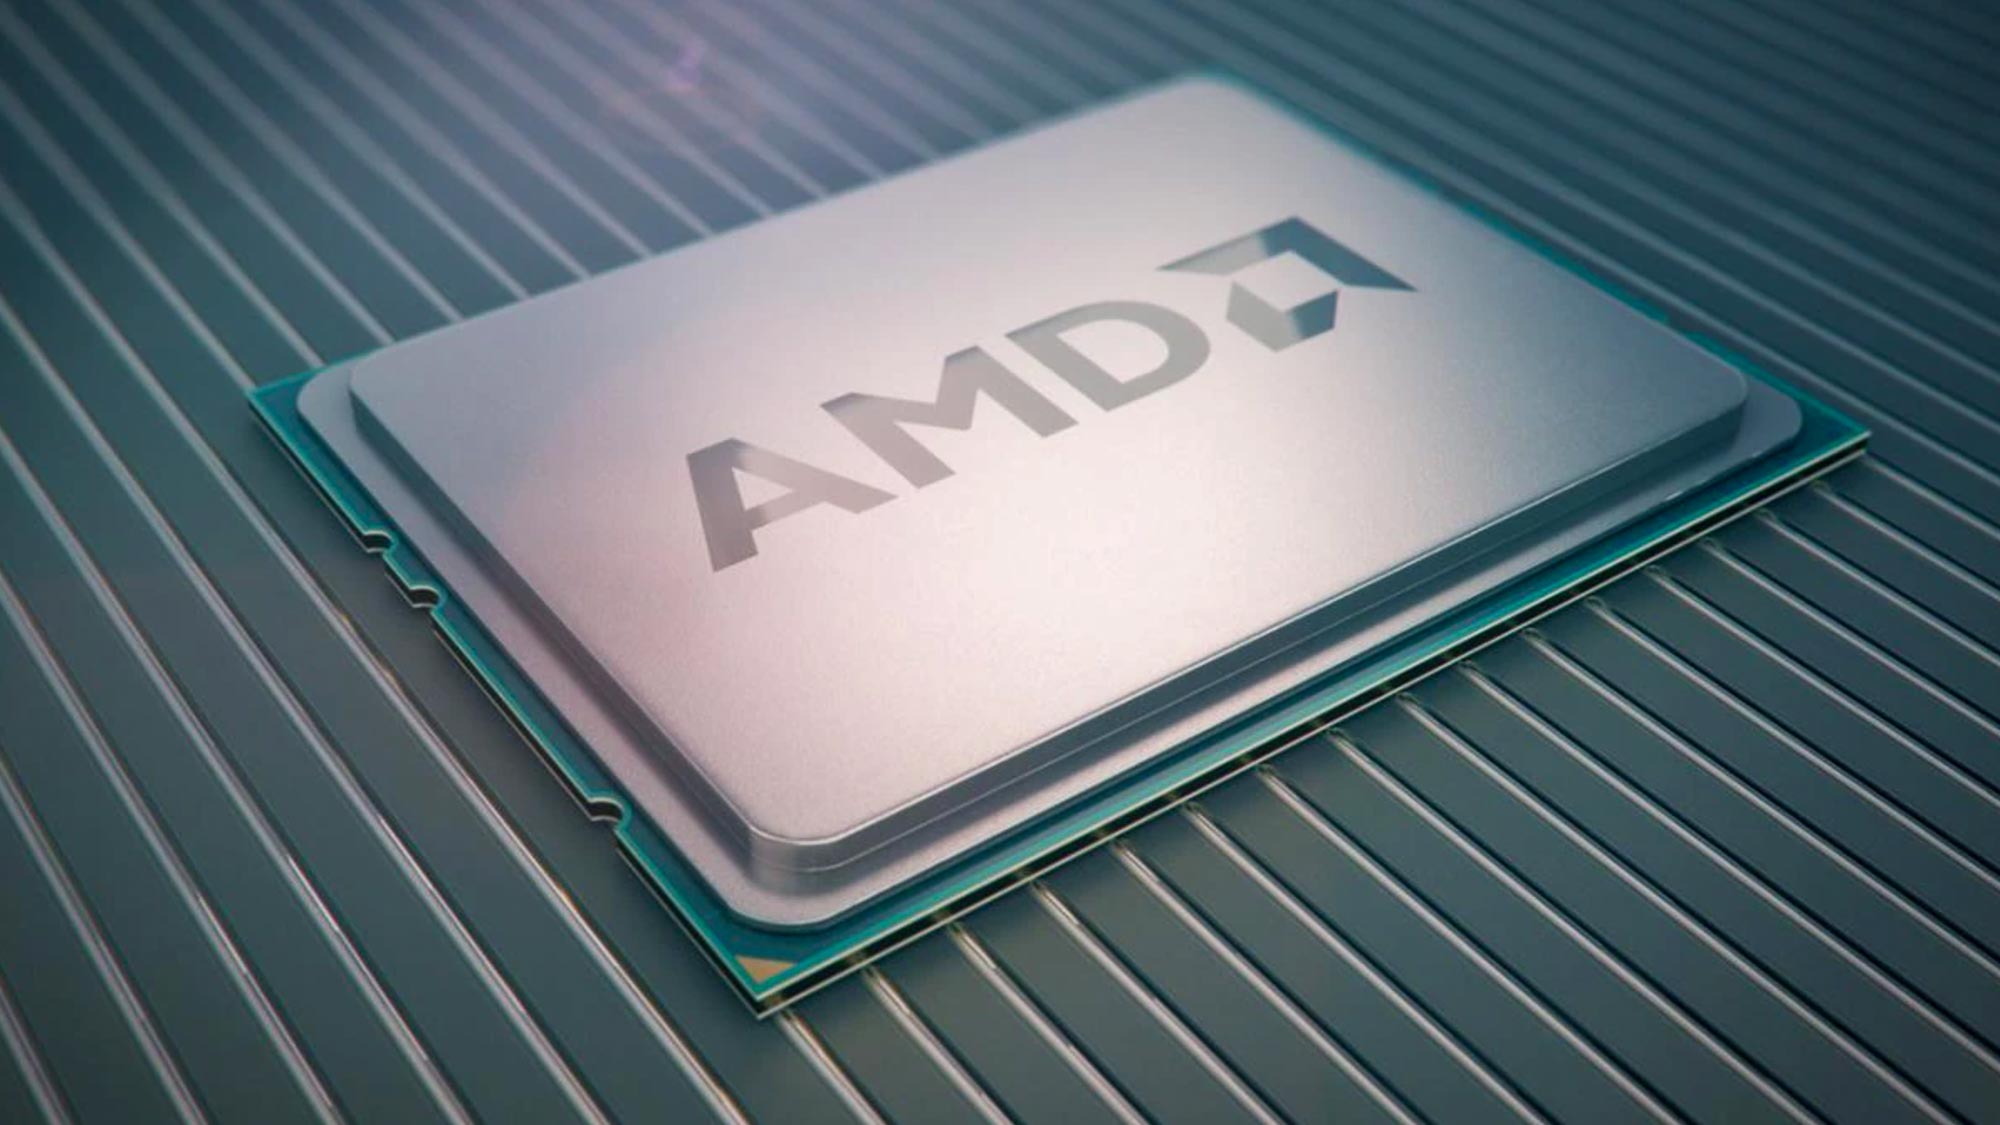 AMD Zen 4 — what we know so far